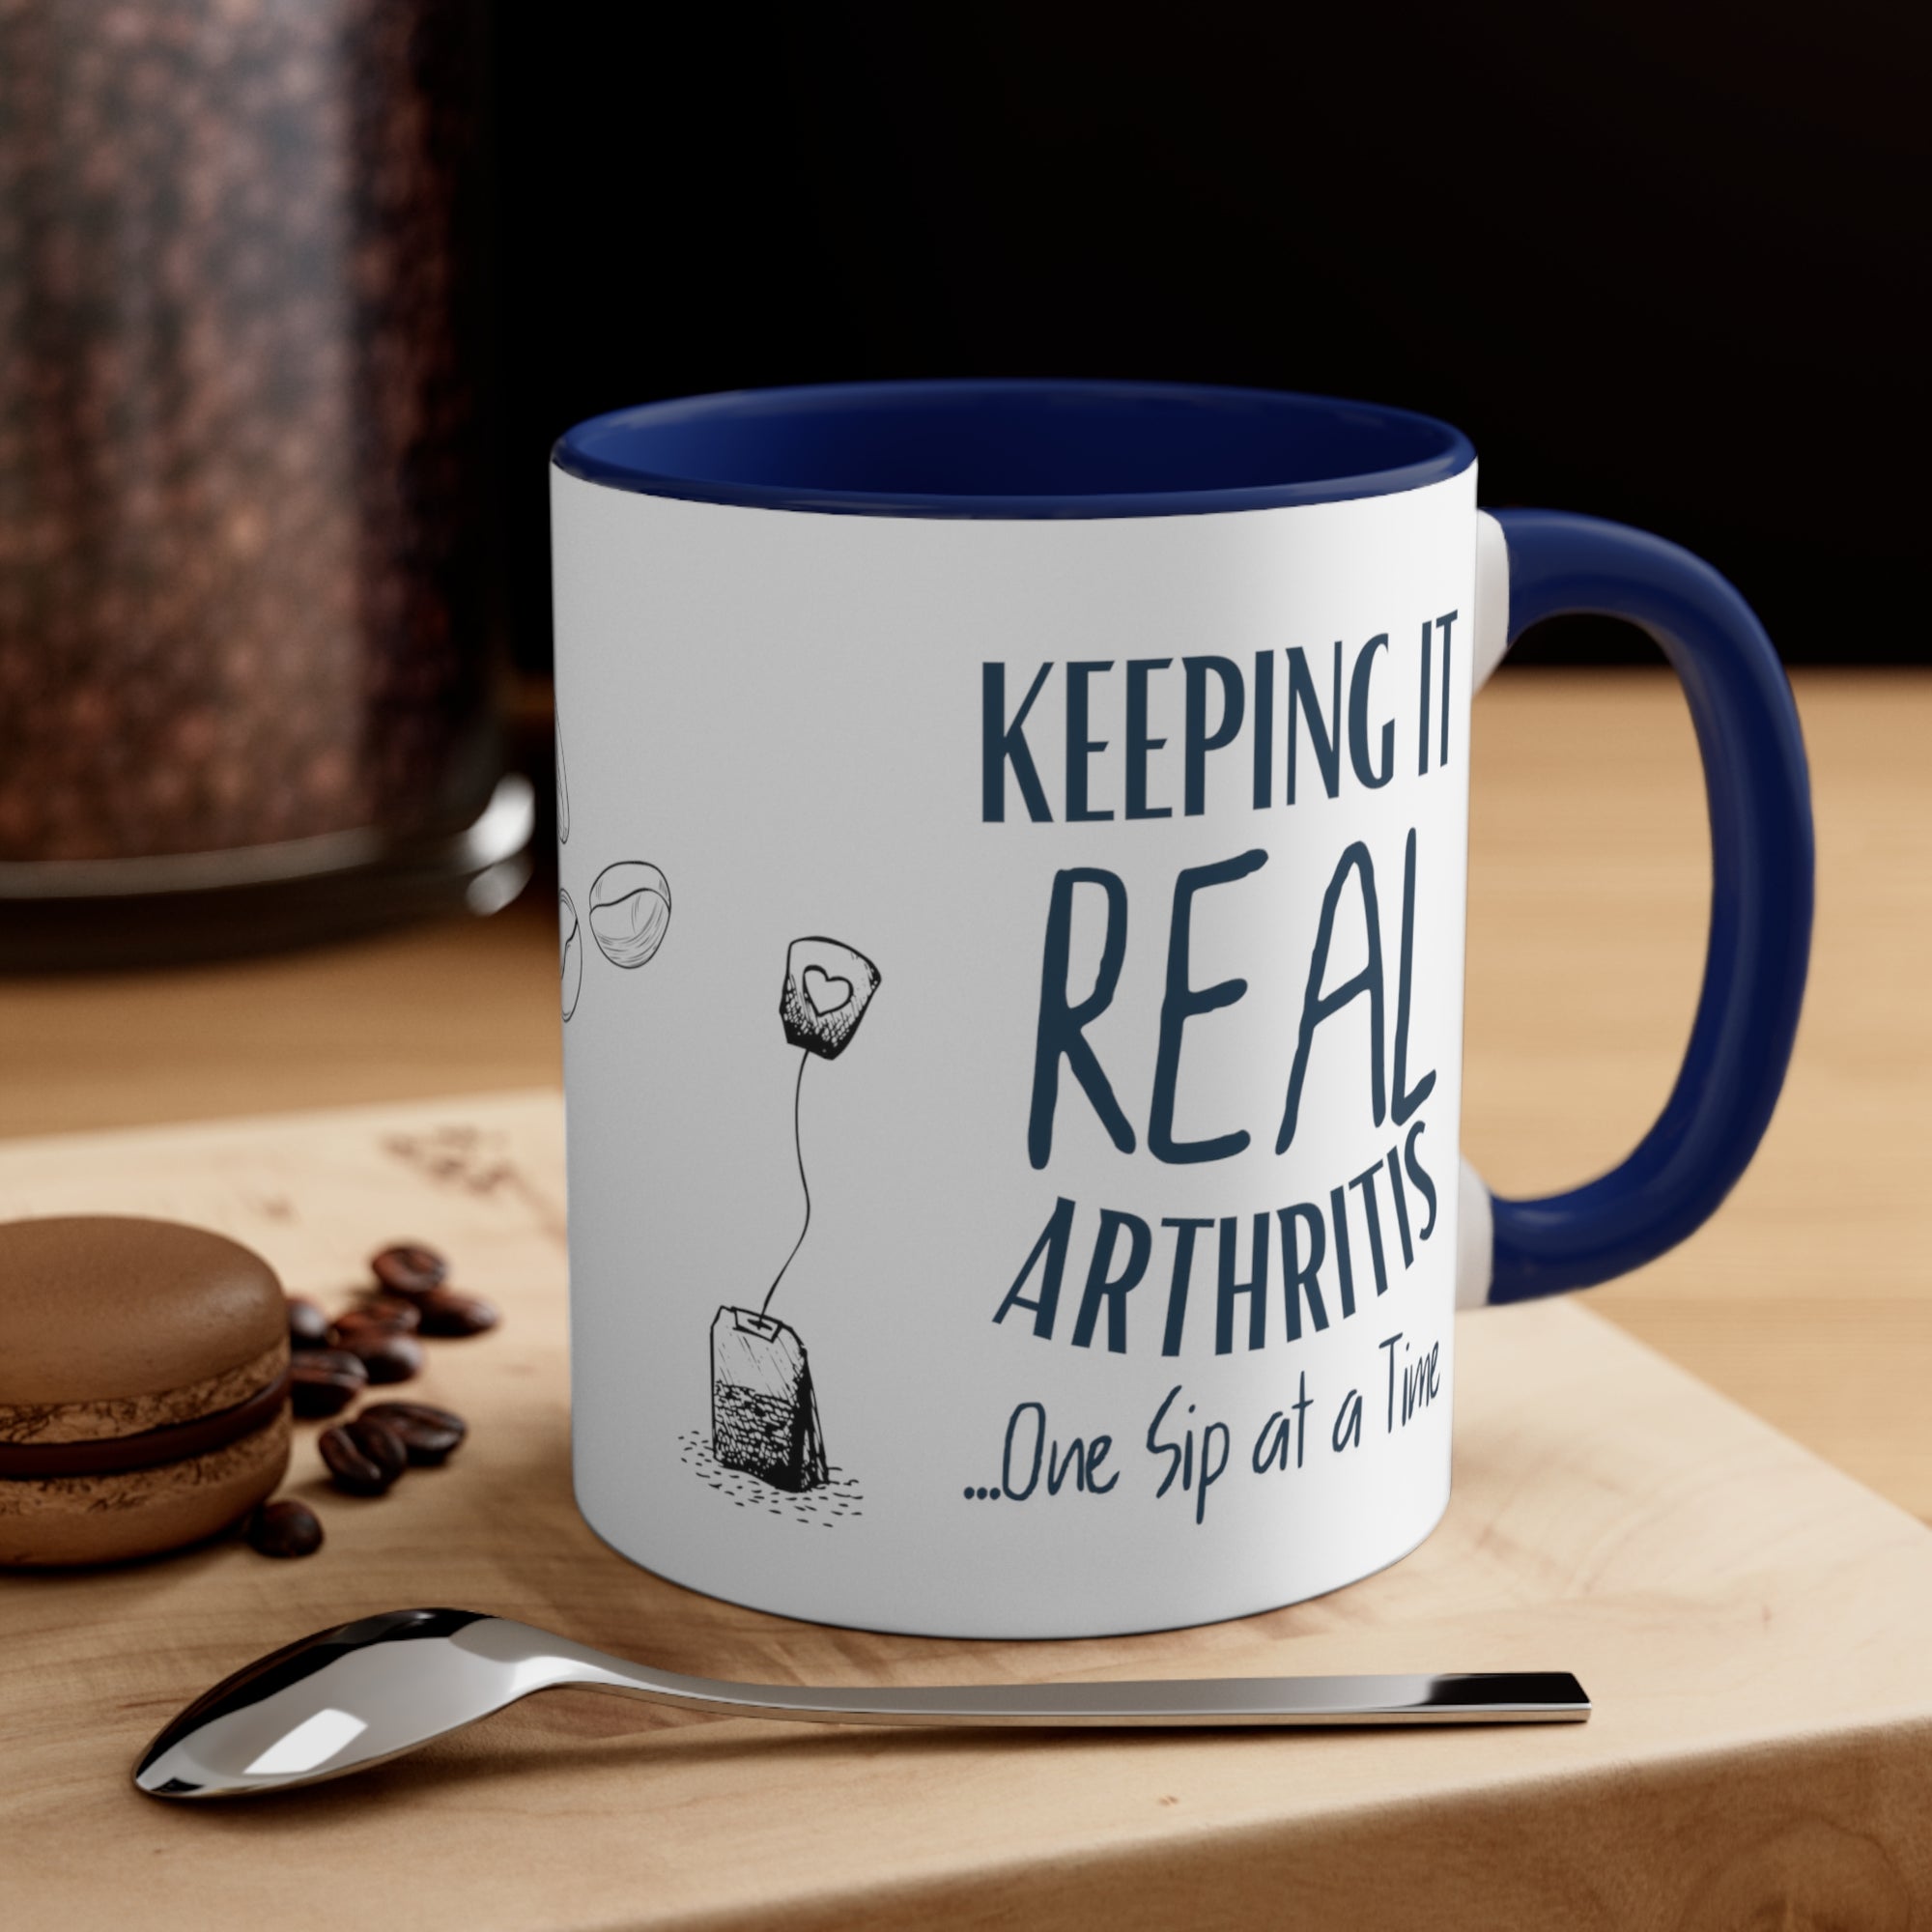 "One Sip at a Time" Arthritis 11 oz. Two-Tone Mug